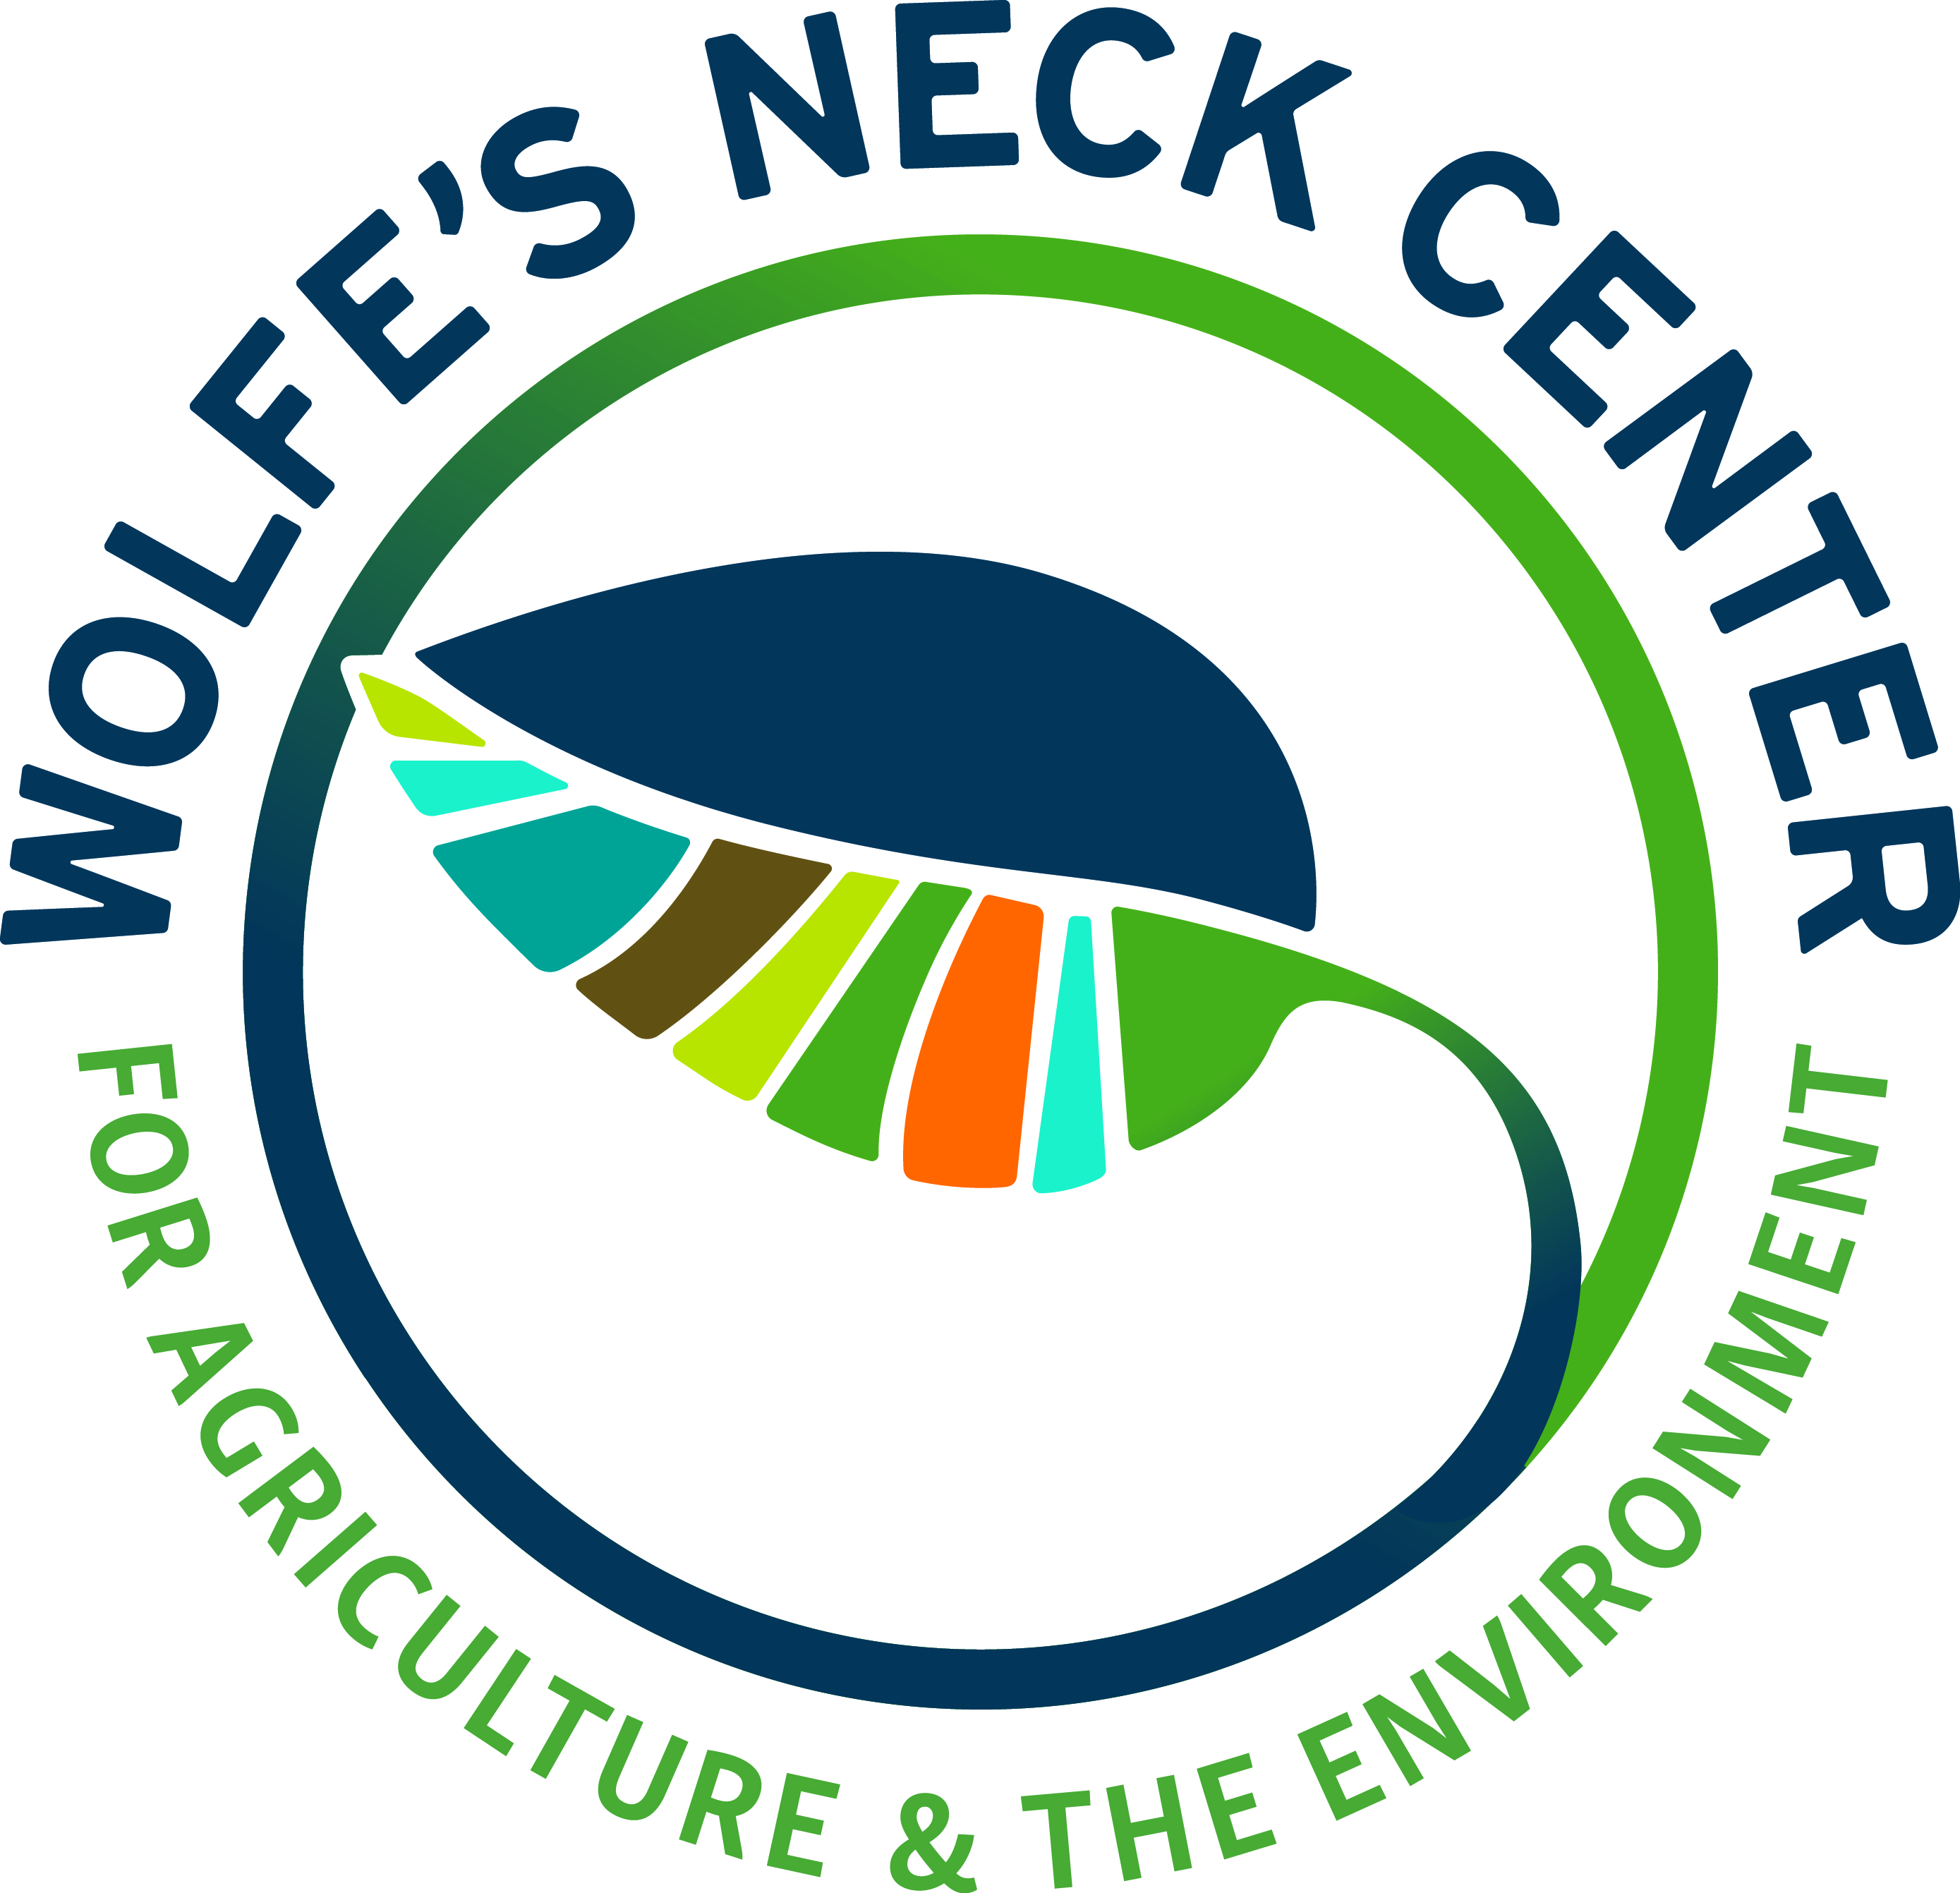 Wolfe’s Neck Farm Camp